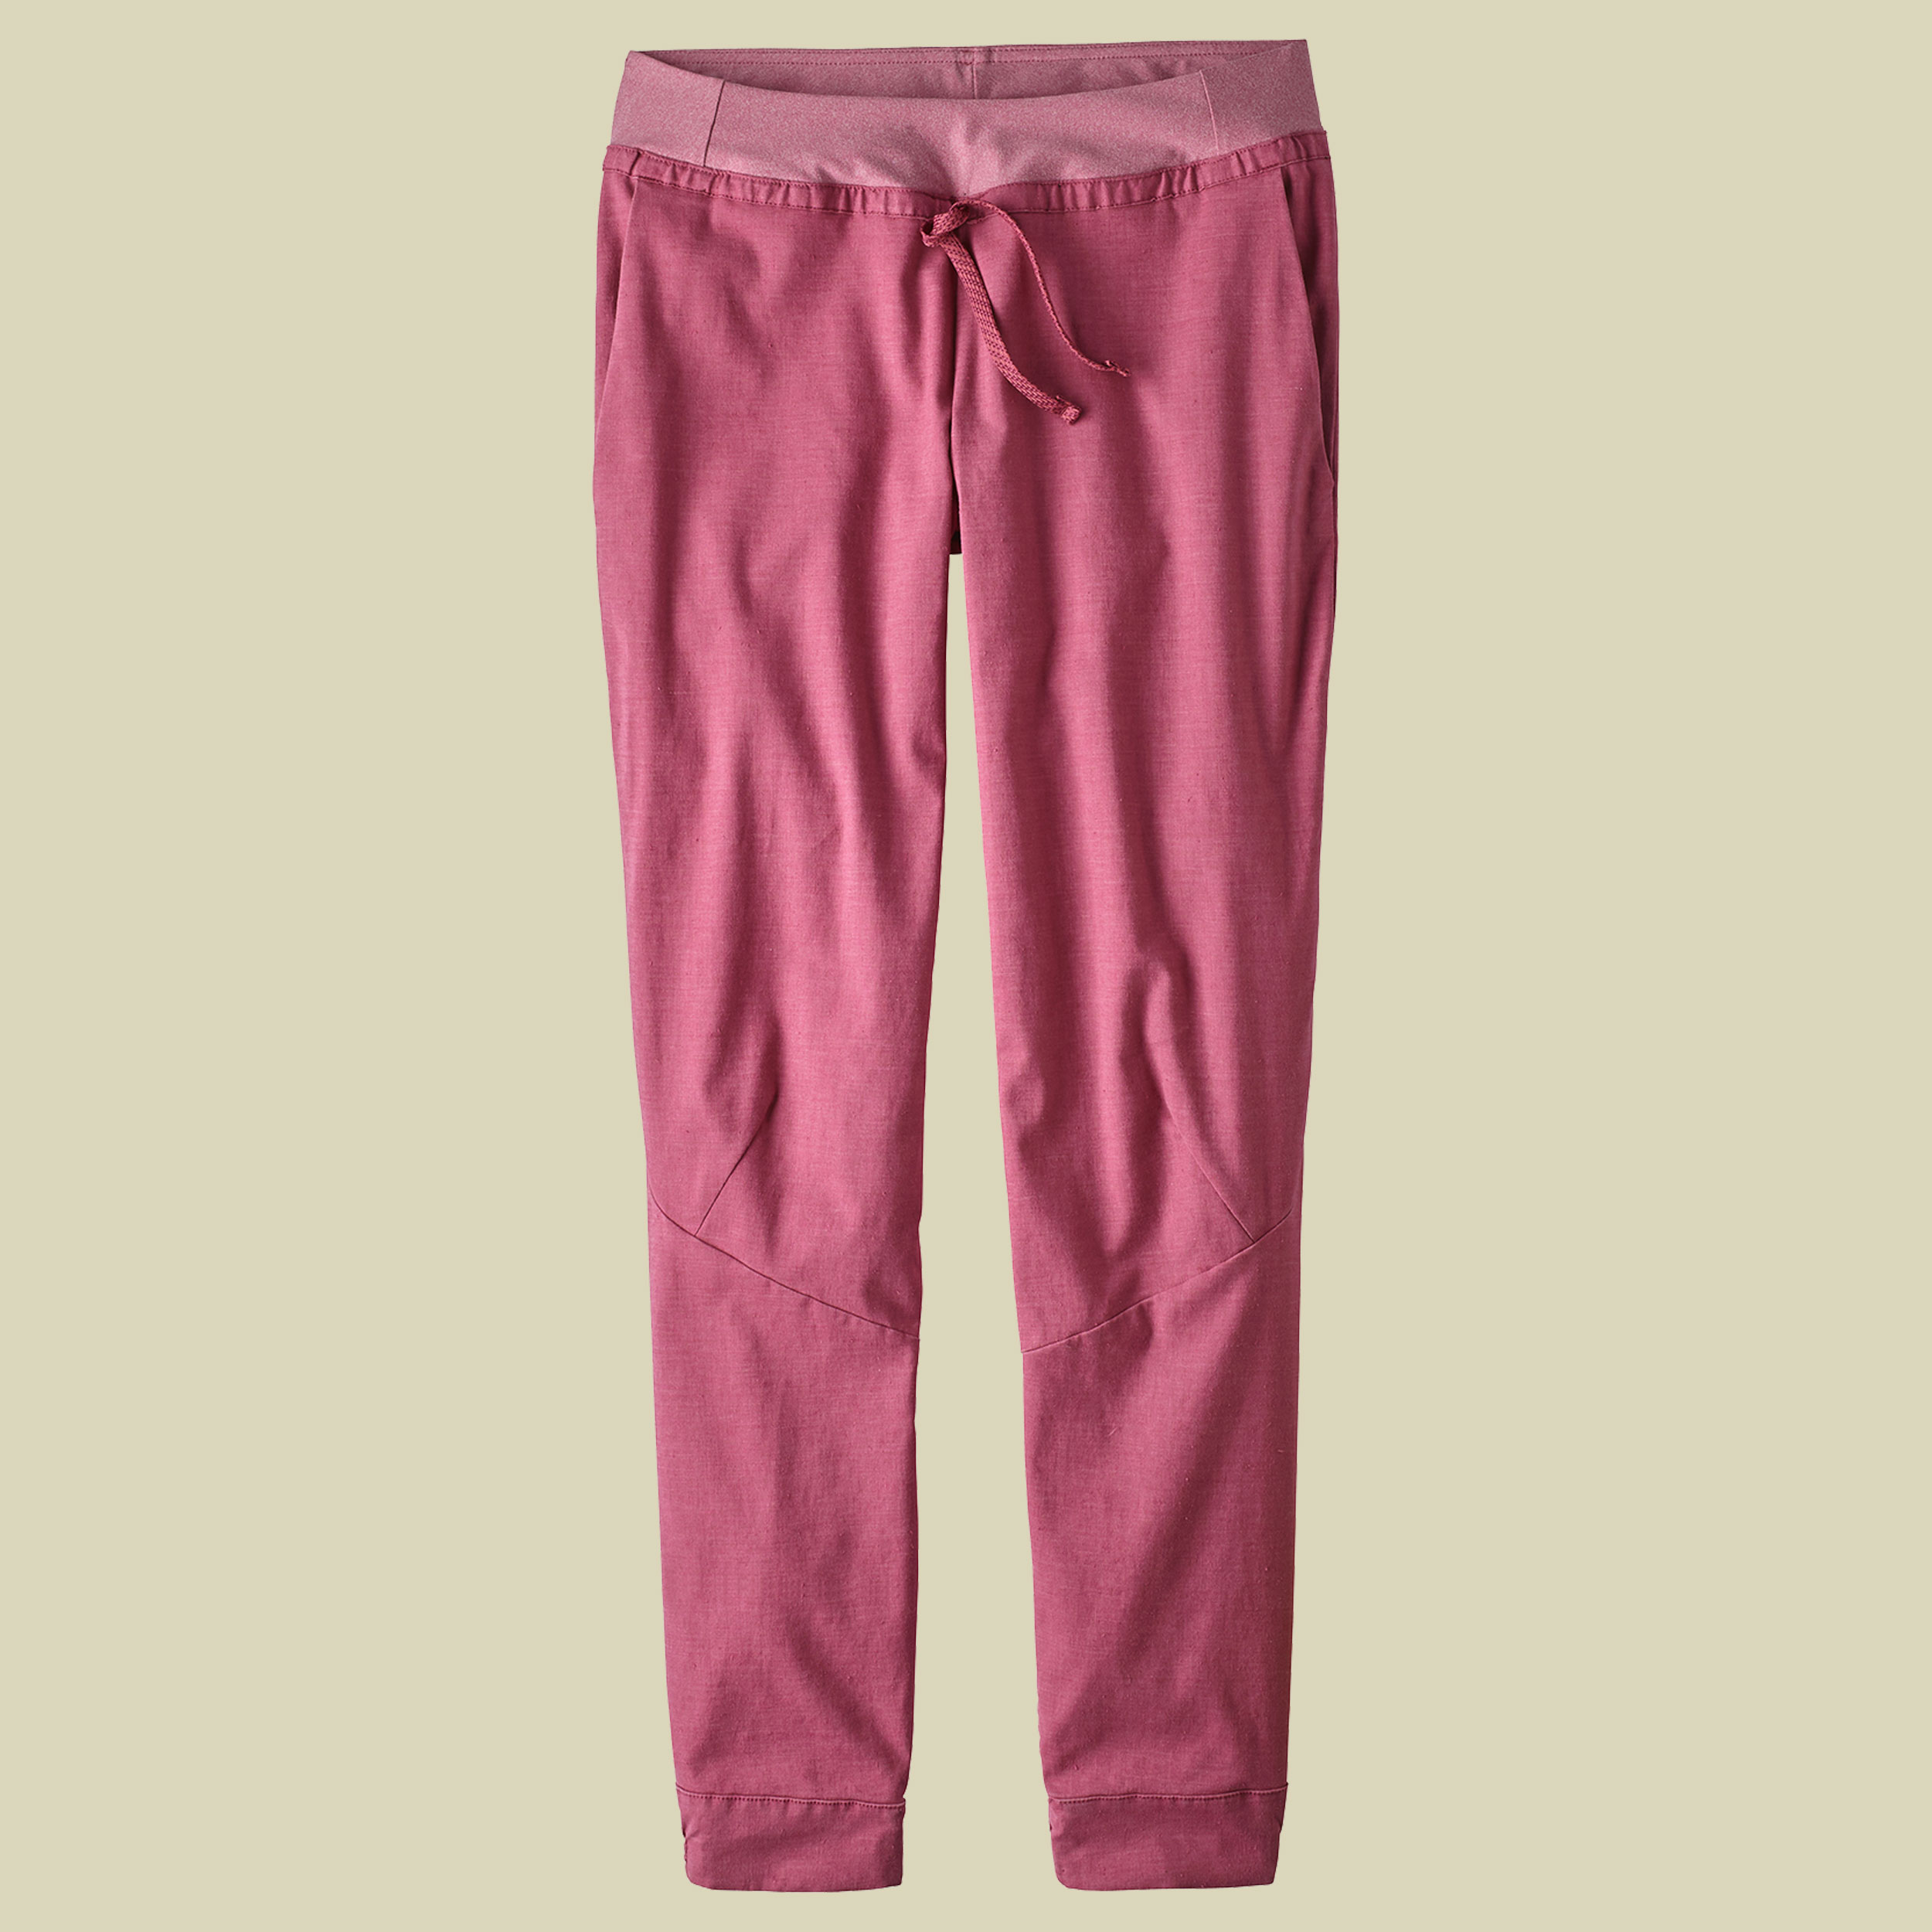 Hampi Rock Pants Women Größe S Farbe star pink